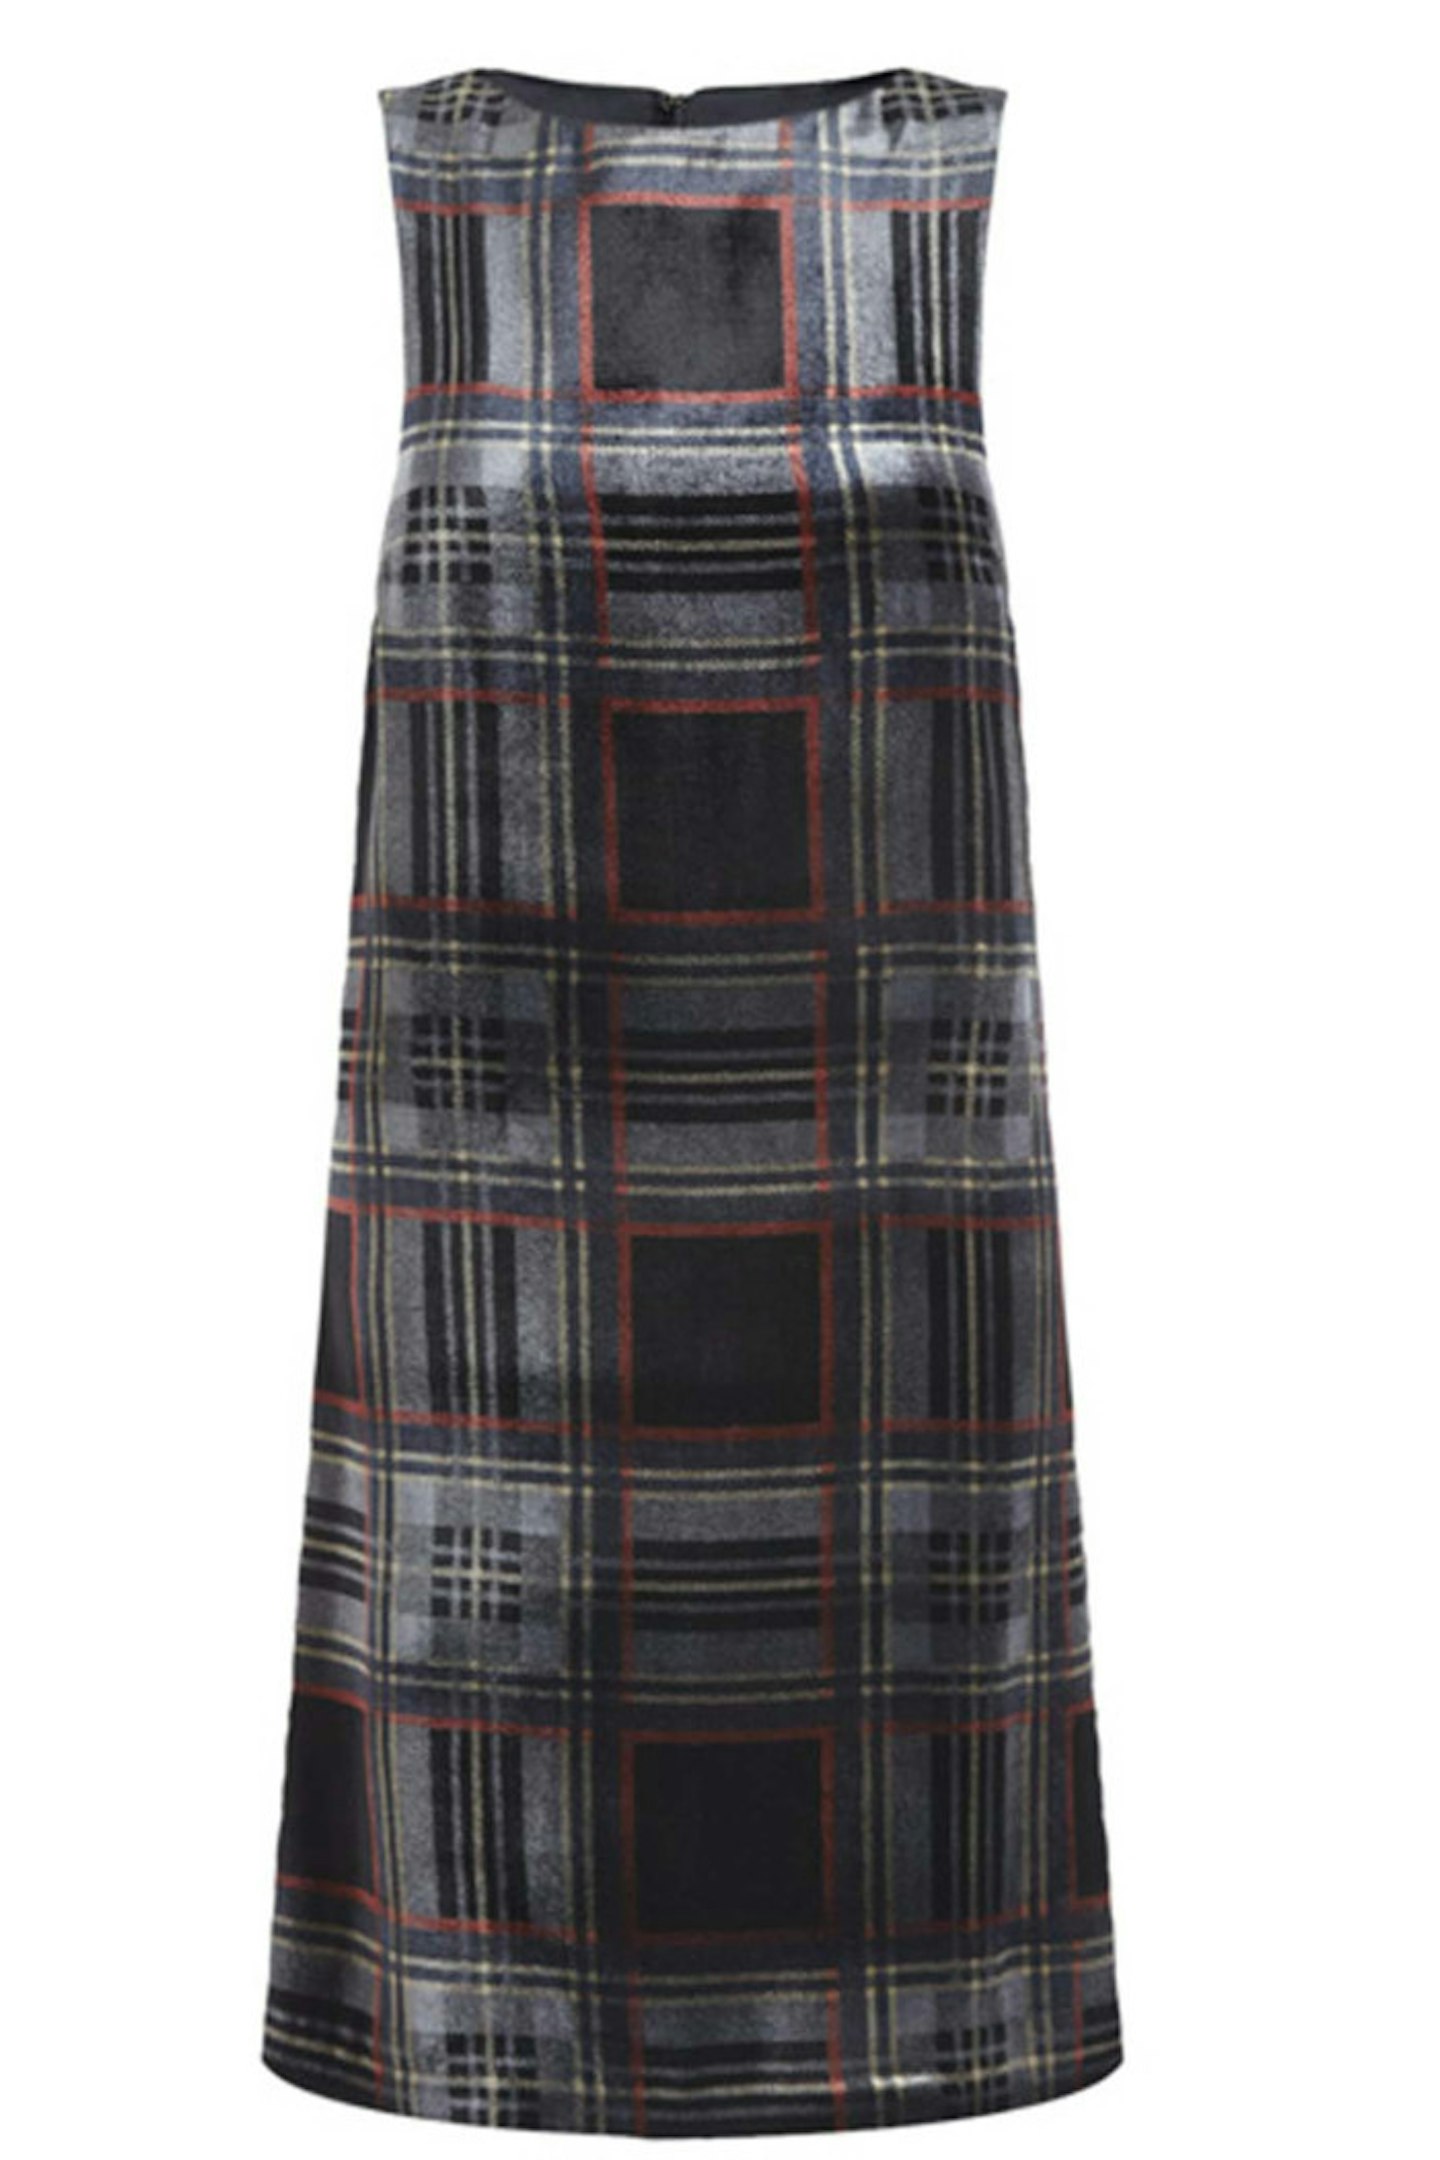 7. Grey tartan dress, £149, Jigsaw